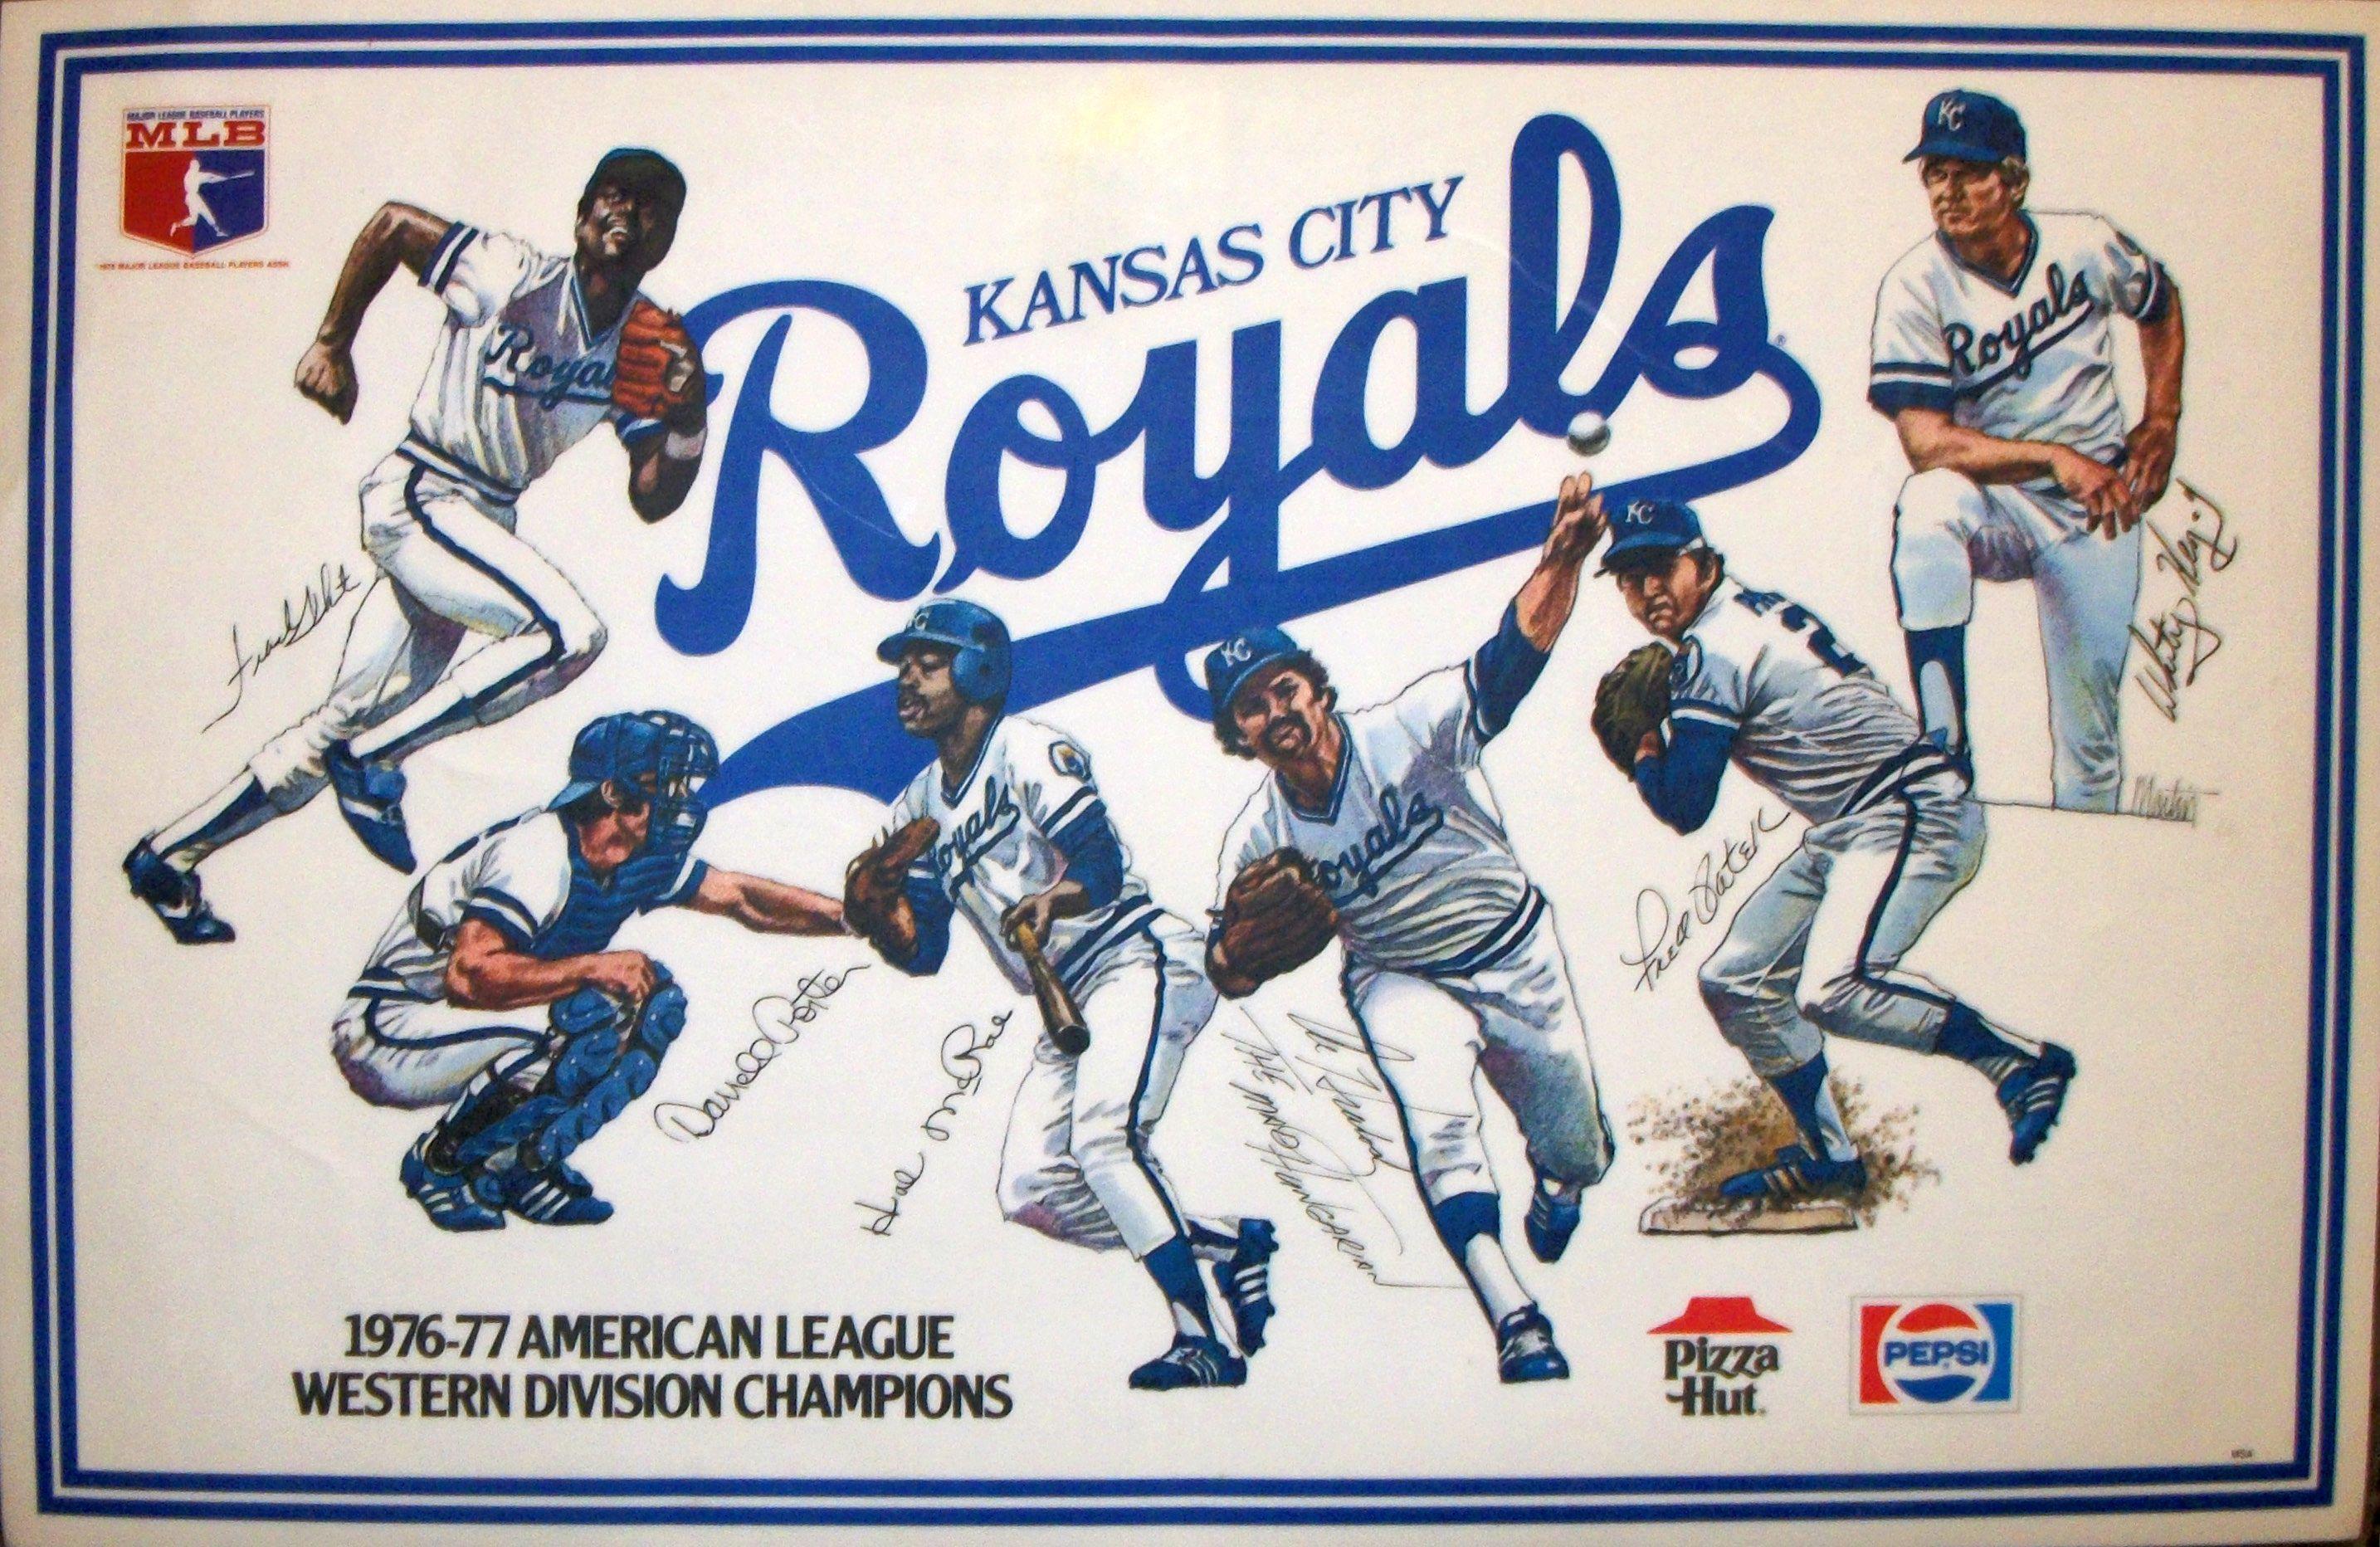 Kansas City Royals wallpaper 3 by hawthorne85 on DeviantArt